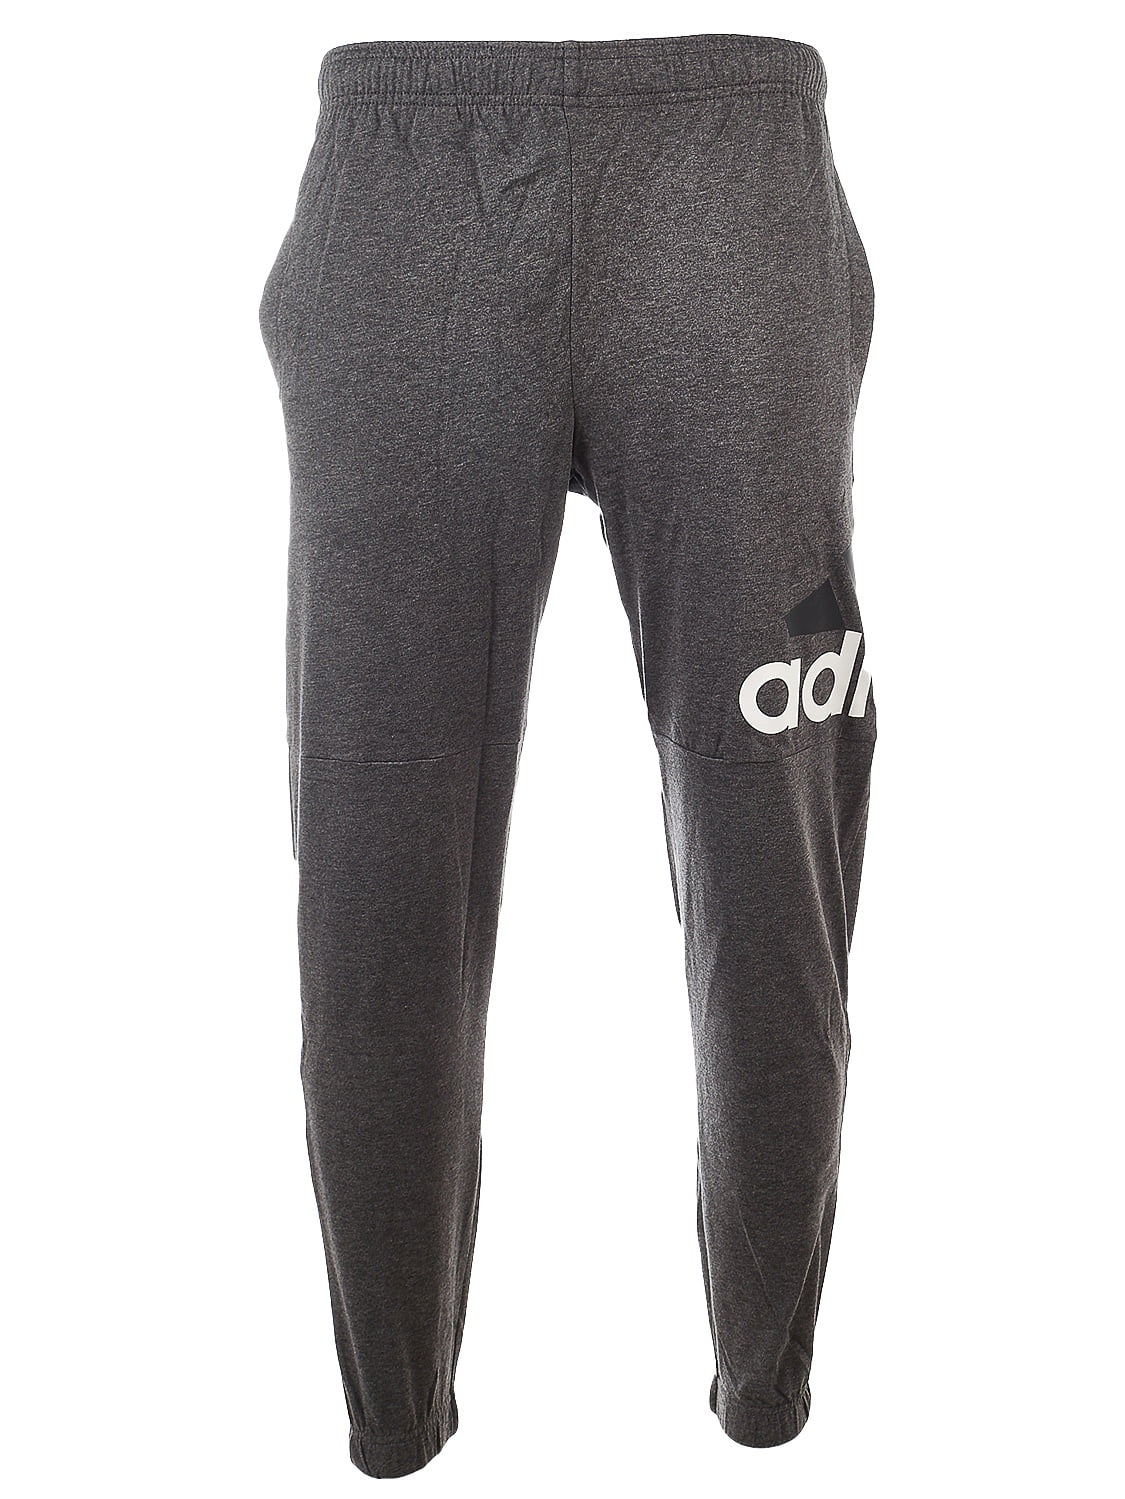 Adidas Essentials Performance Logo Pants Mens Grey - Dark Heather/White - - S